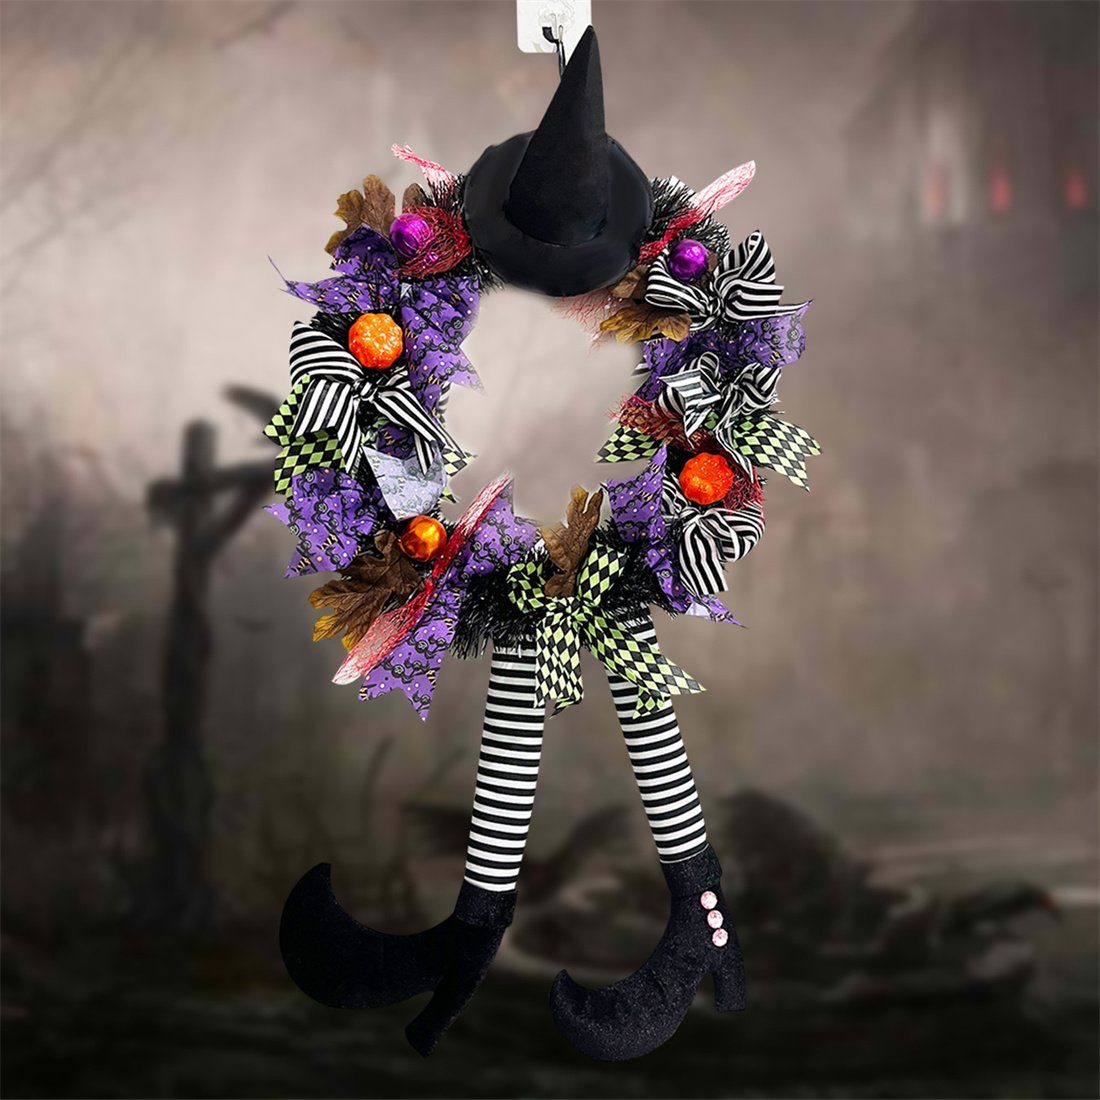 Kranz Dress Kranz DÖRÖY Kunstgirlande Halloween hängend, hängend,Party Tür Up Hexe hängend,